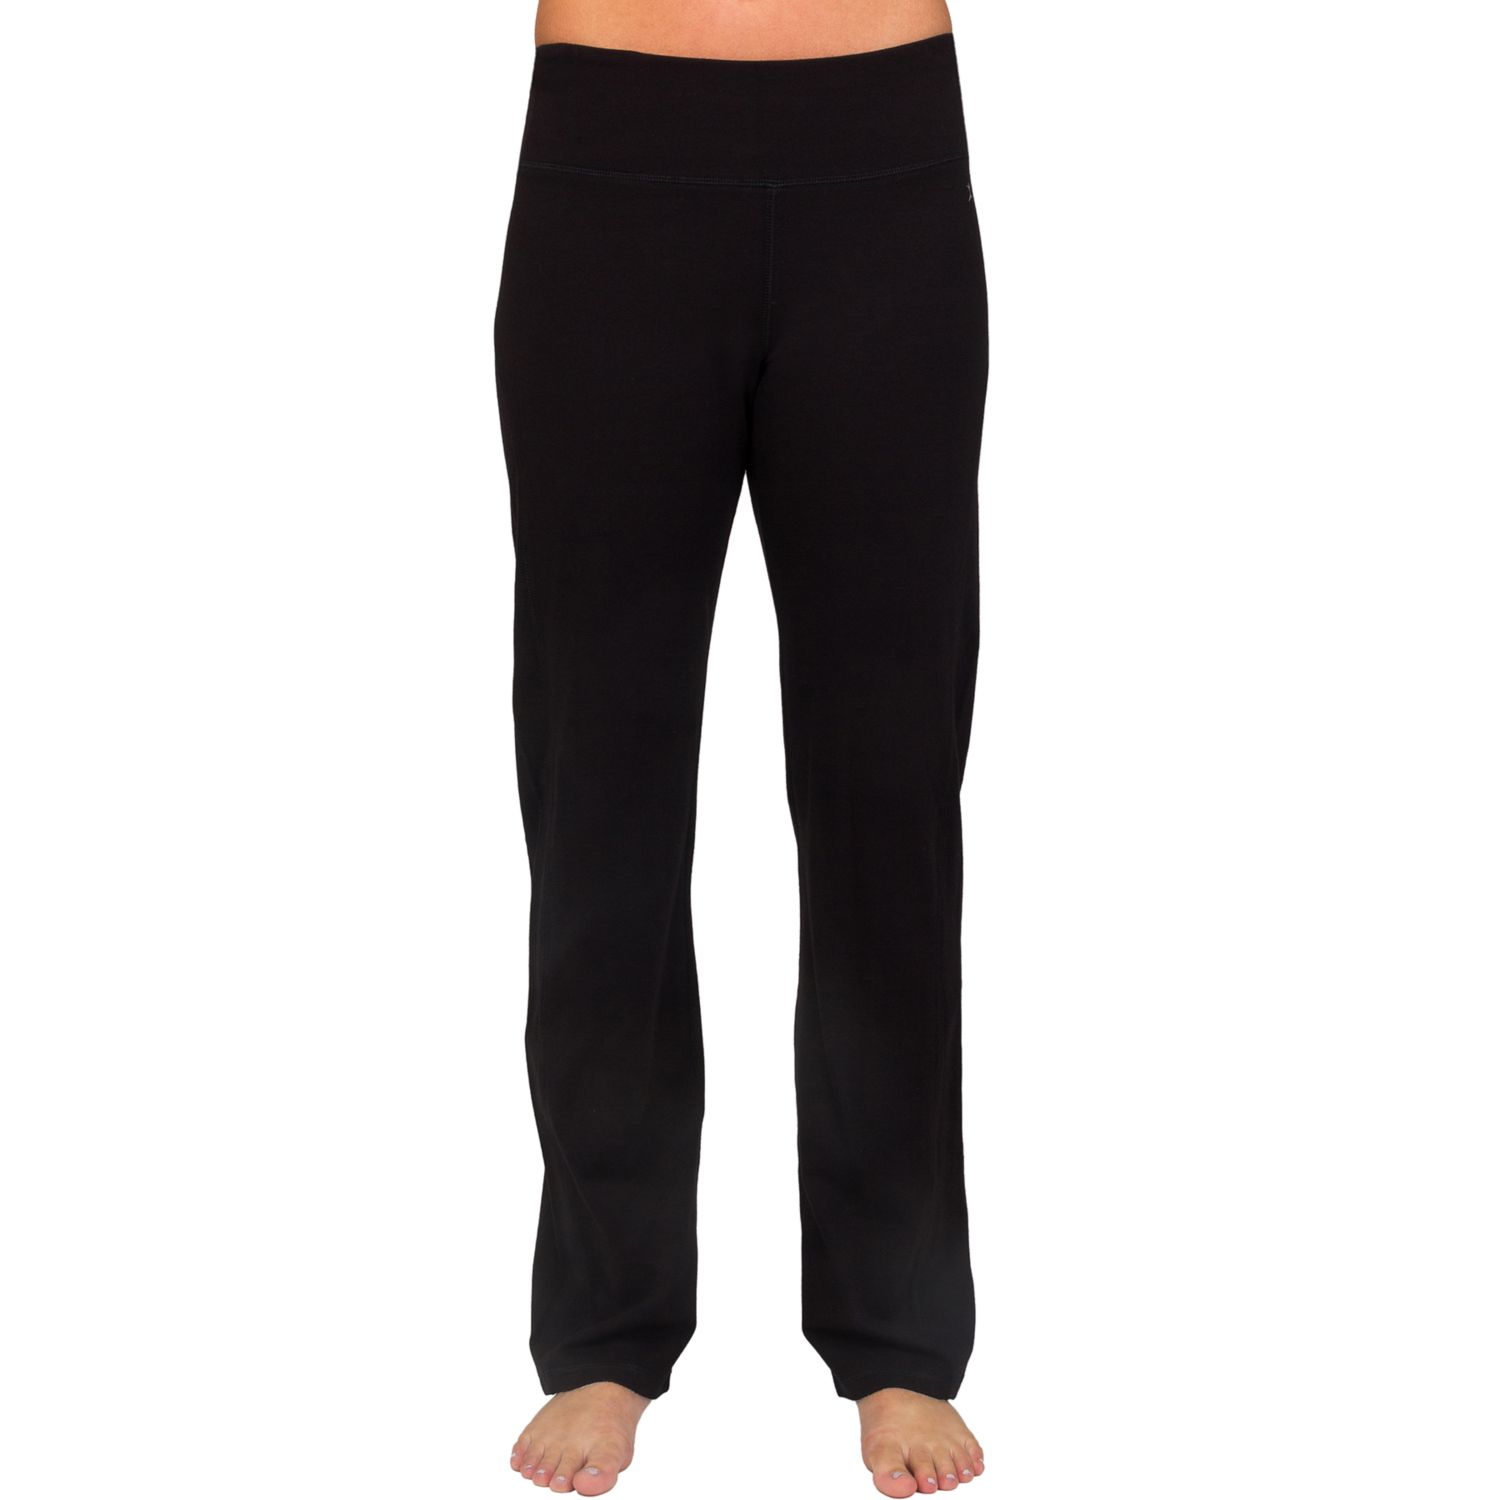 Danskin Women's Sleek Fit Yoga Pant, Black, Medium 